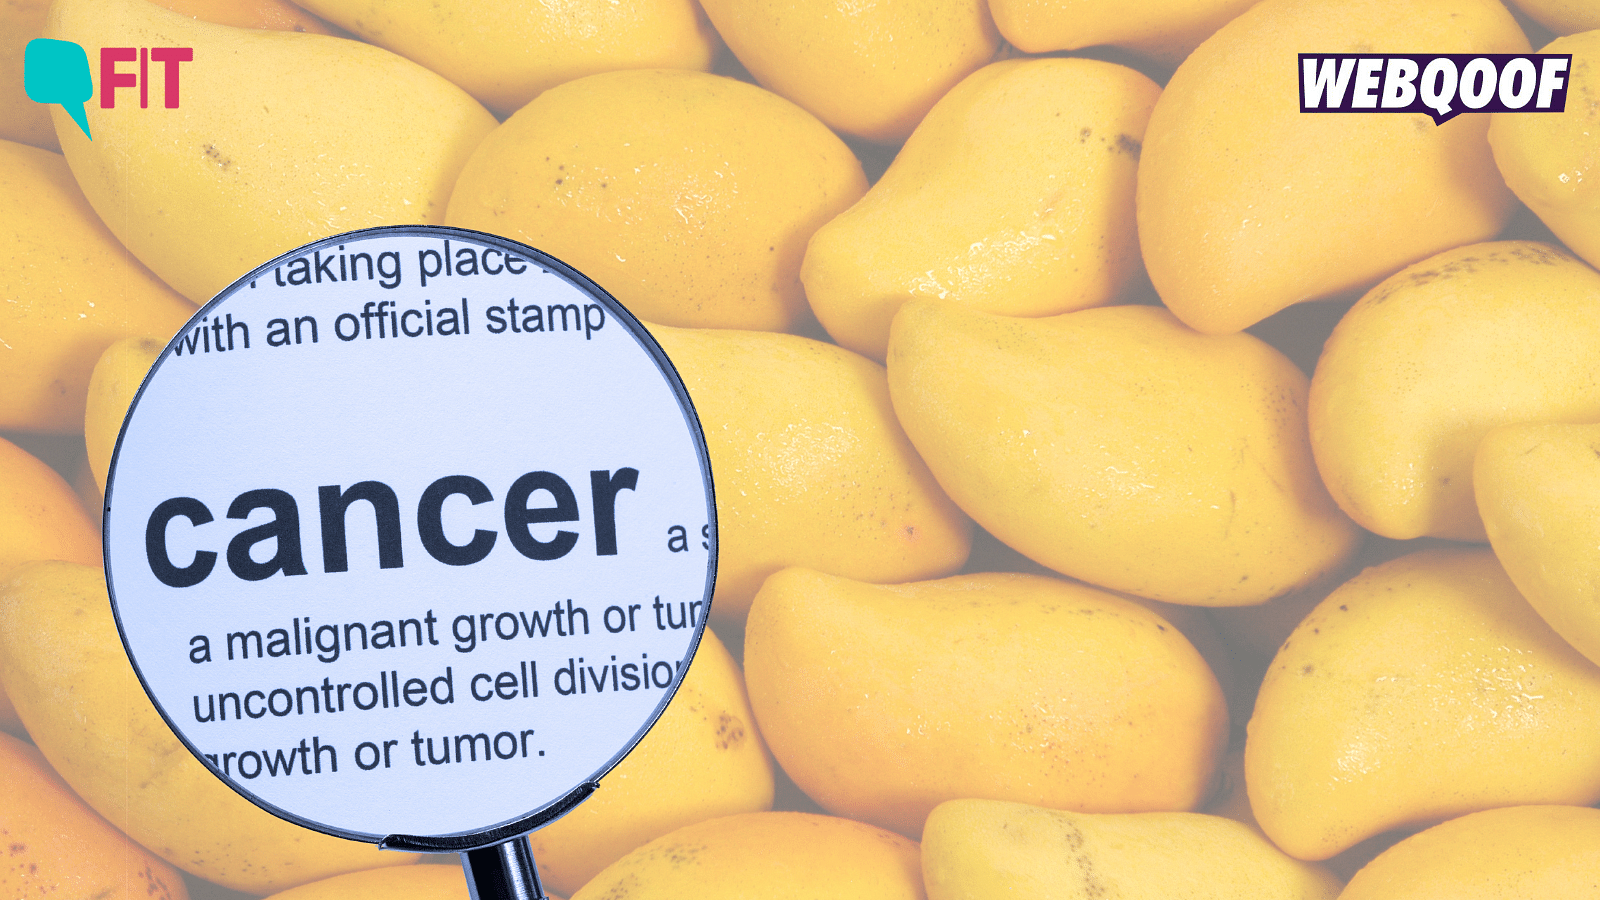 Mango Peels Reduce Cancer Risk: How True Is the Claim? Doctors Explain